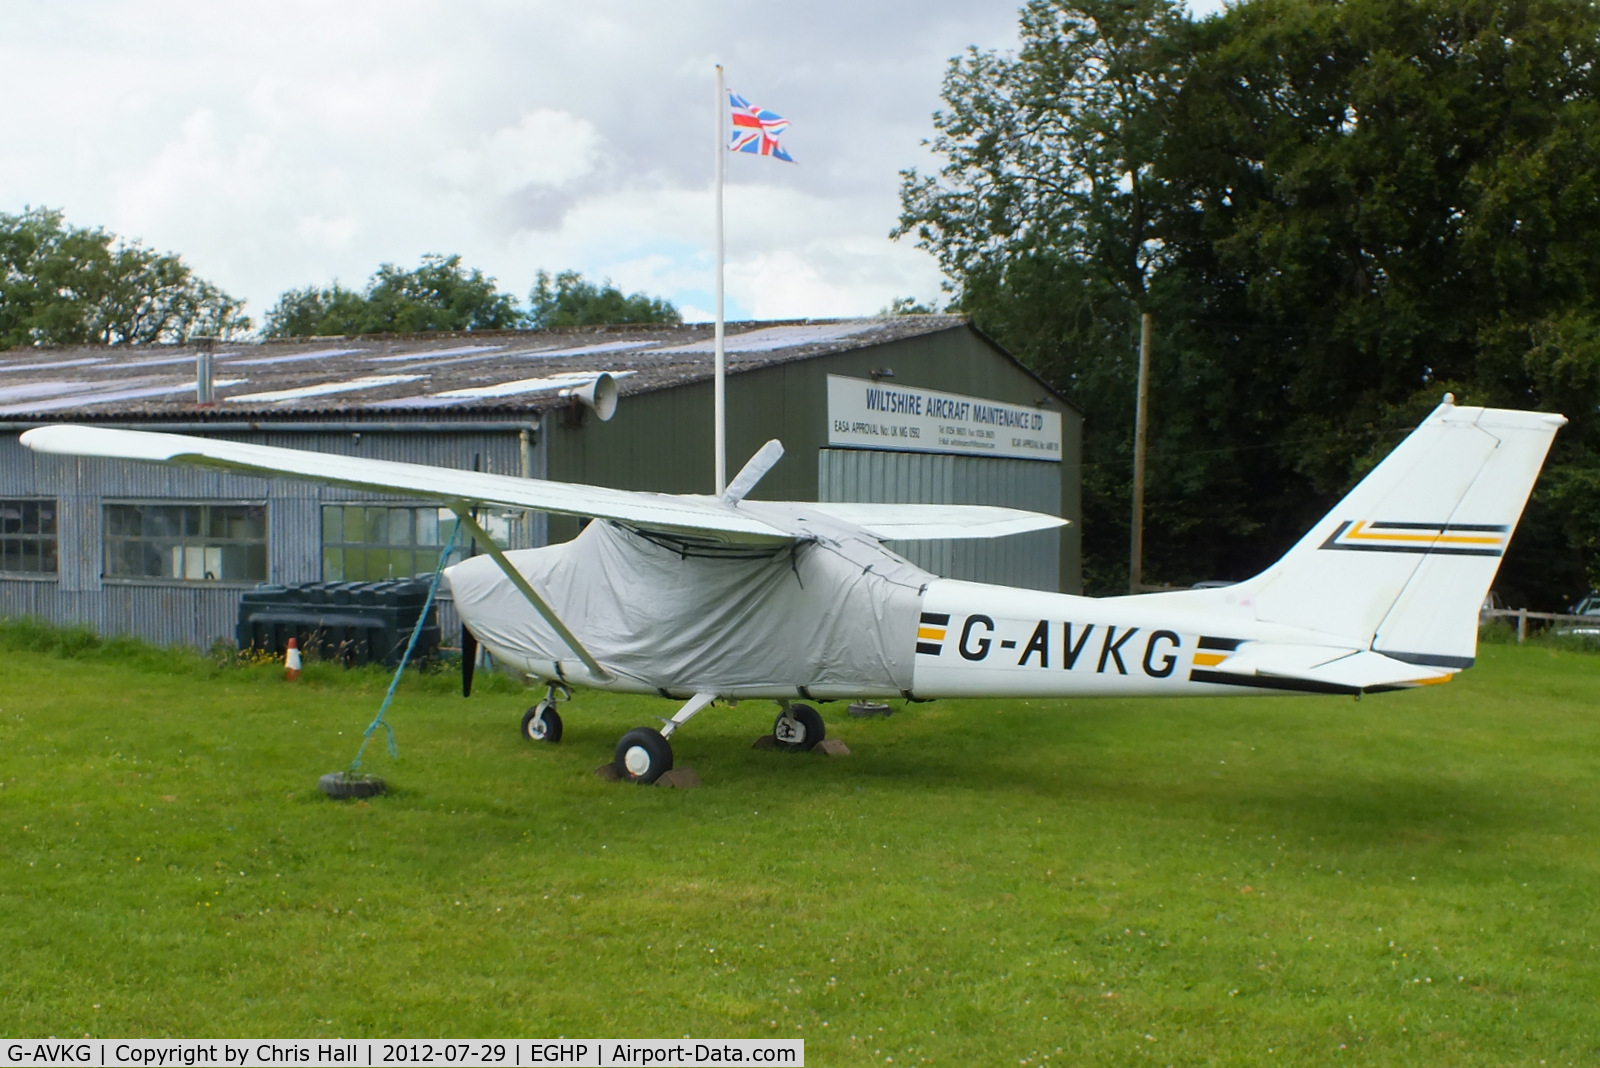 G-AVKG, 1967 Reims F172H Skyhawk C/N 0345, at Popham Airfield, Hampshire